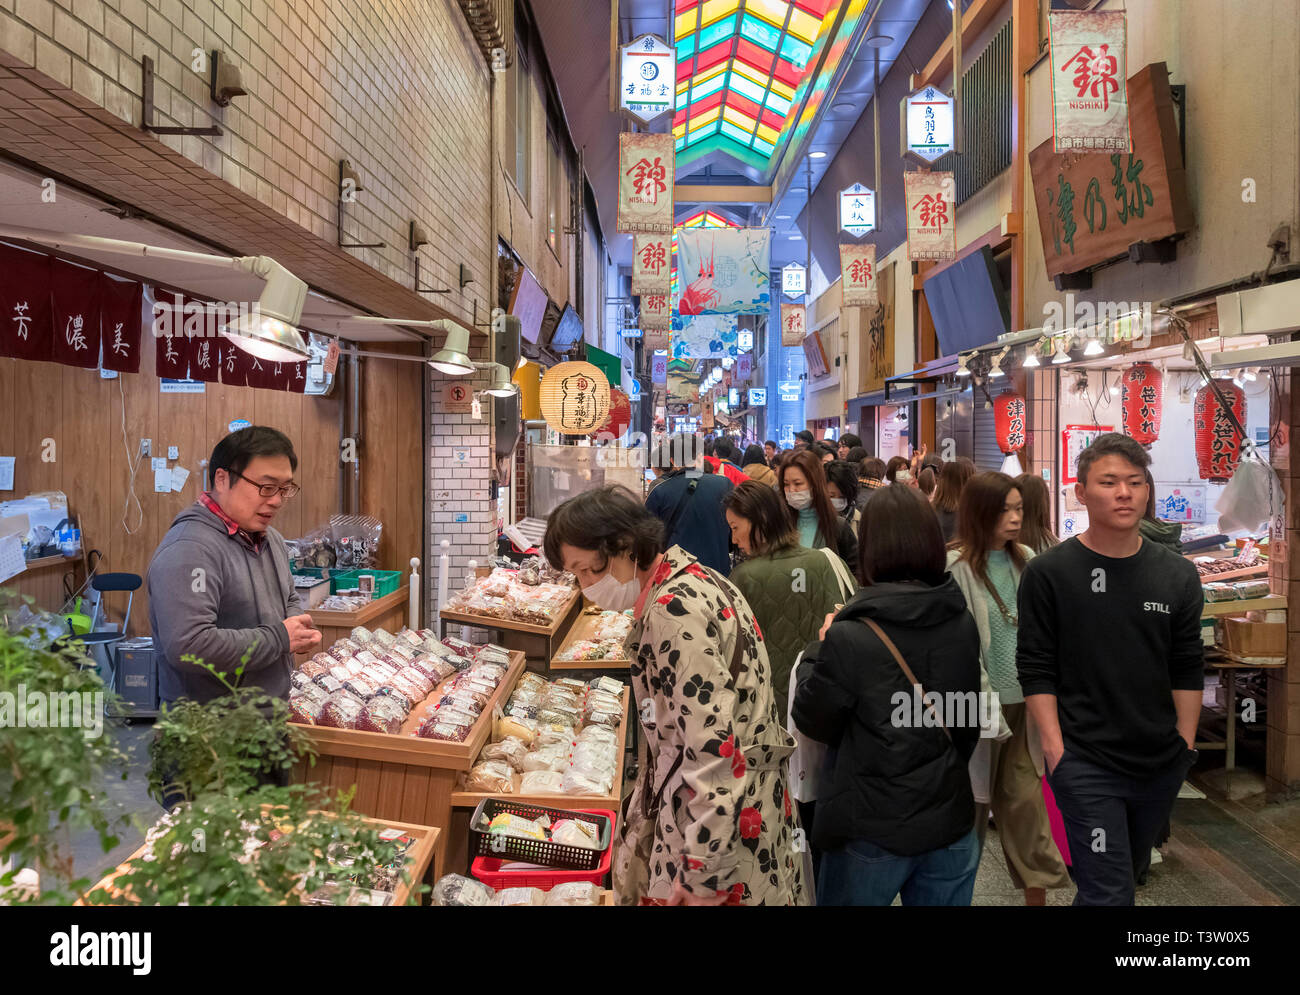 Stalls in Nishiki Market, Kyoto, Japan Stock Photo